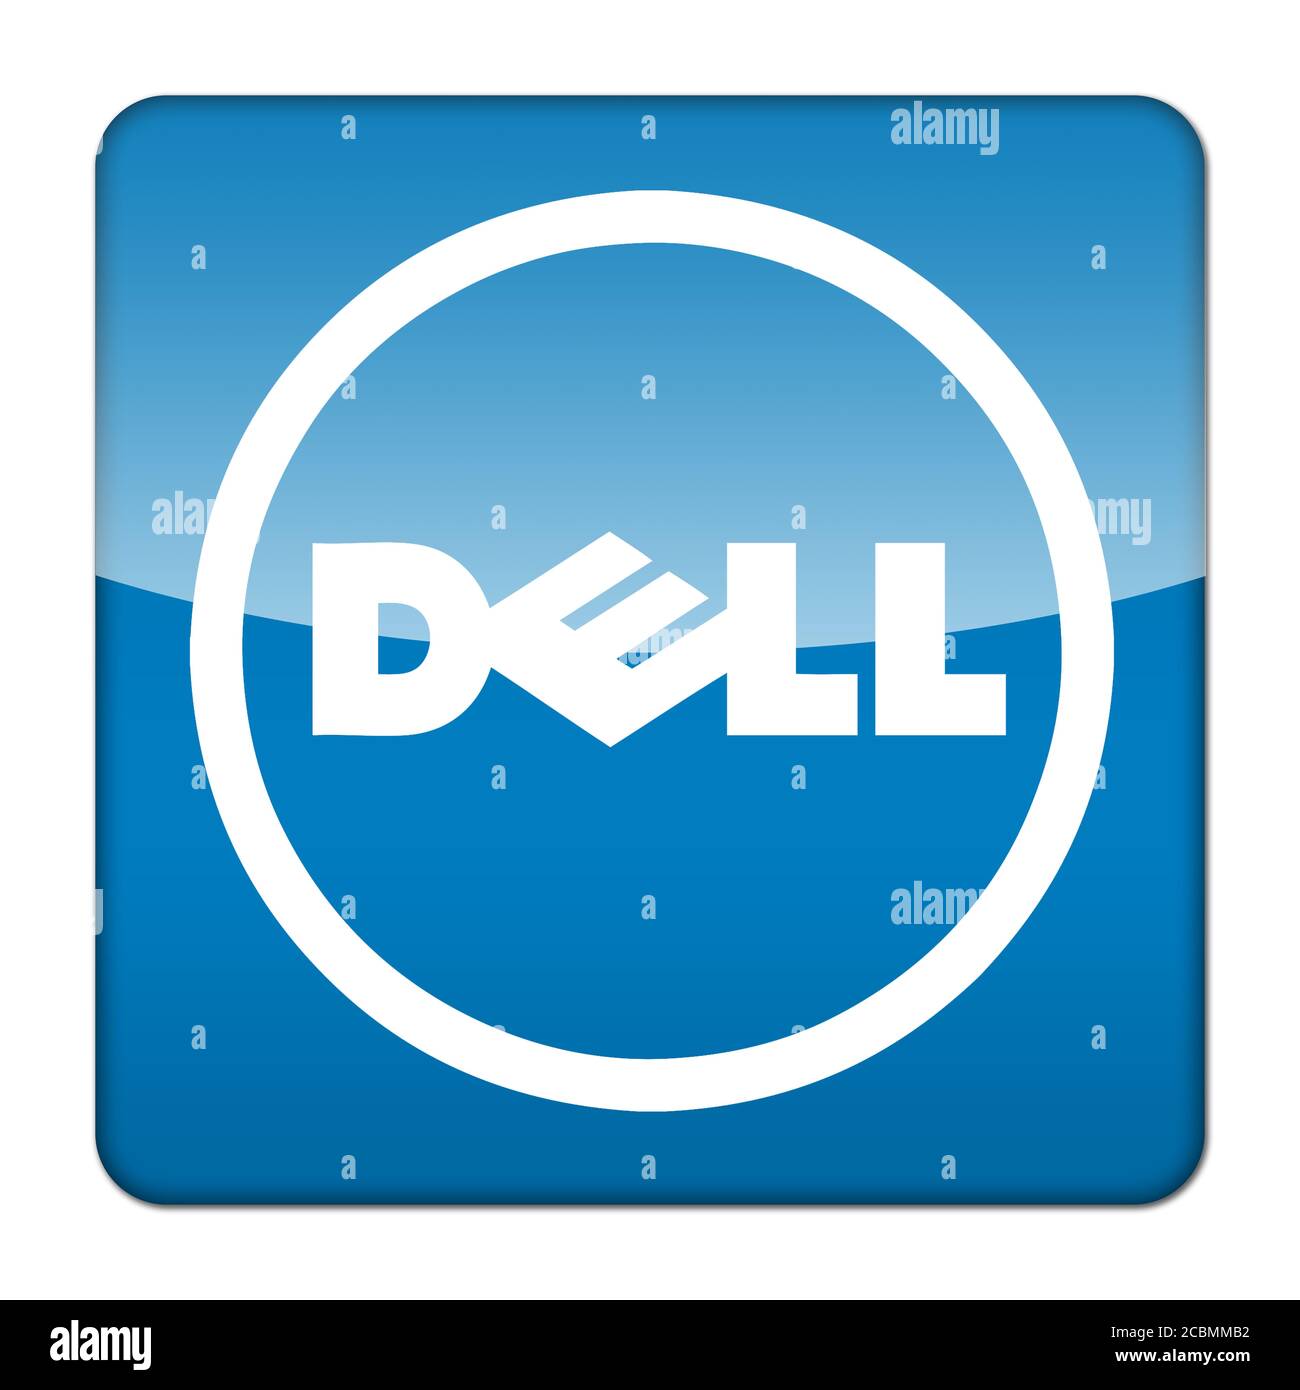 Dell Computers logo icon app flag button Stock Photo